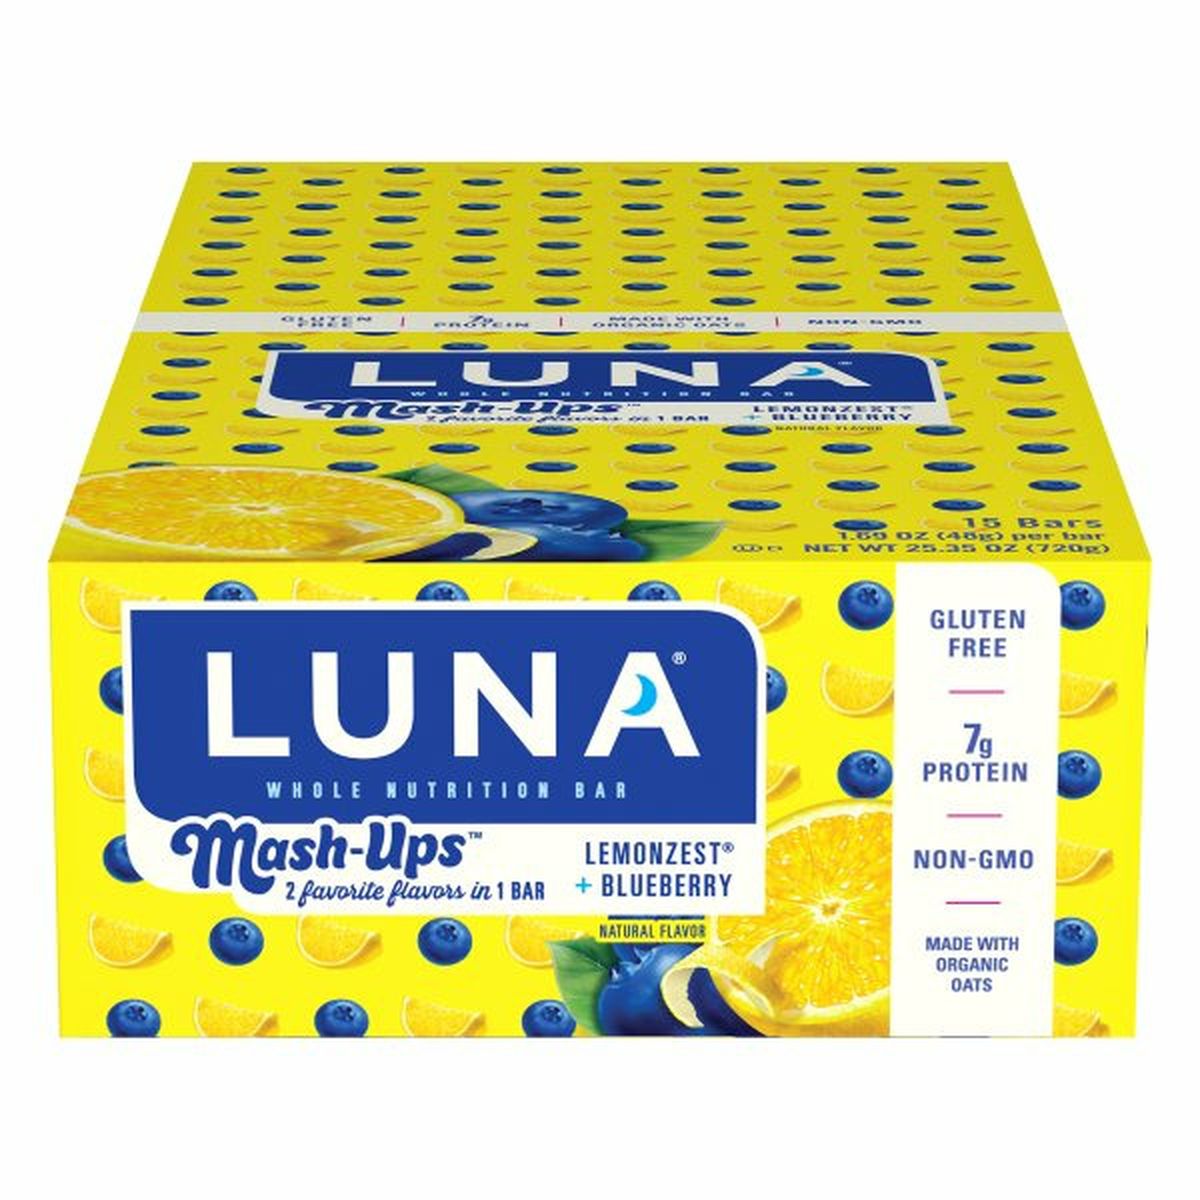 Calories in Luna Mash-Ups Nutrition Bar, Lemonzest + Blueberry